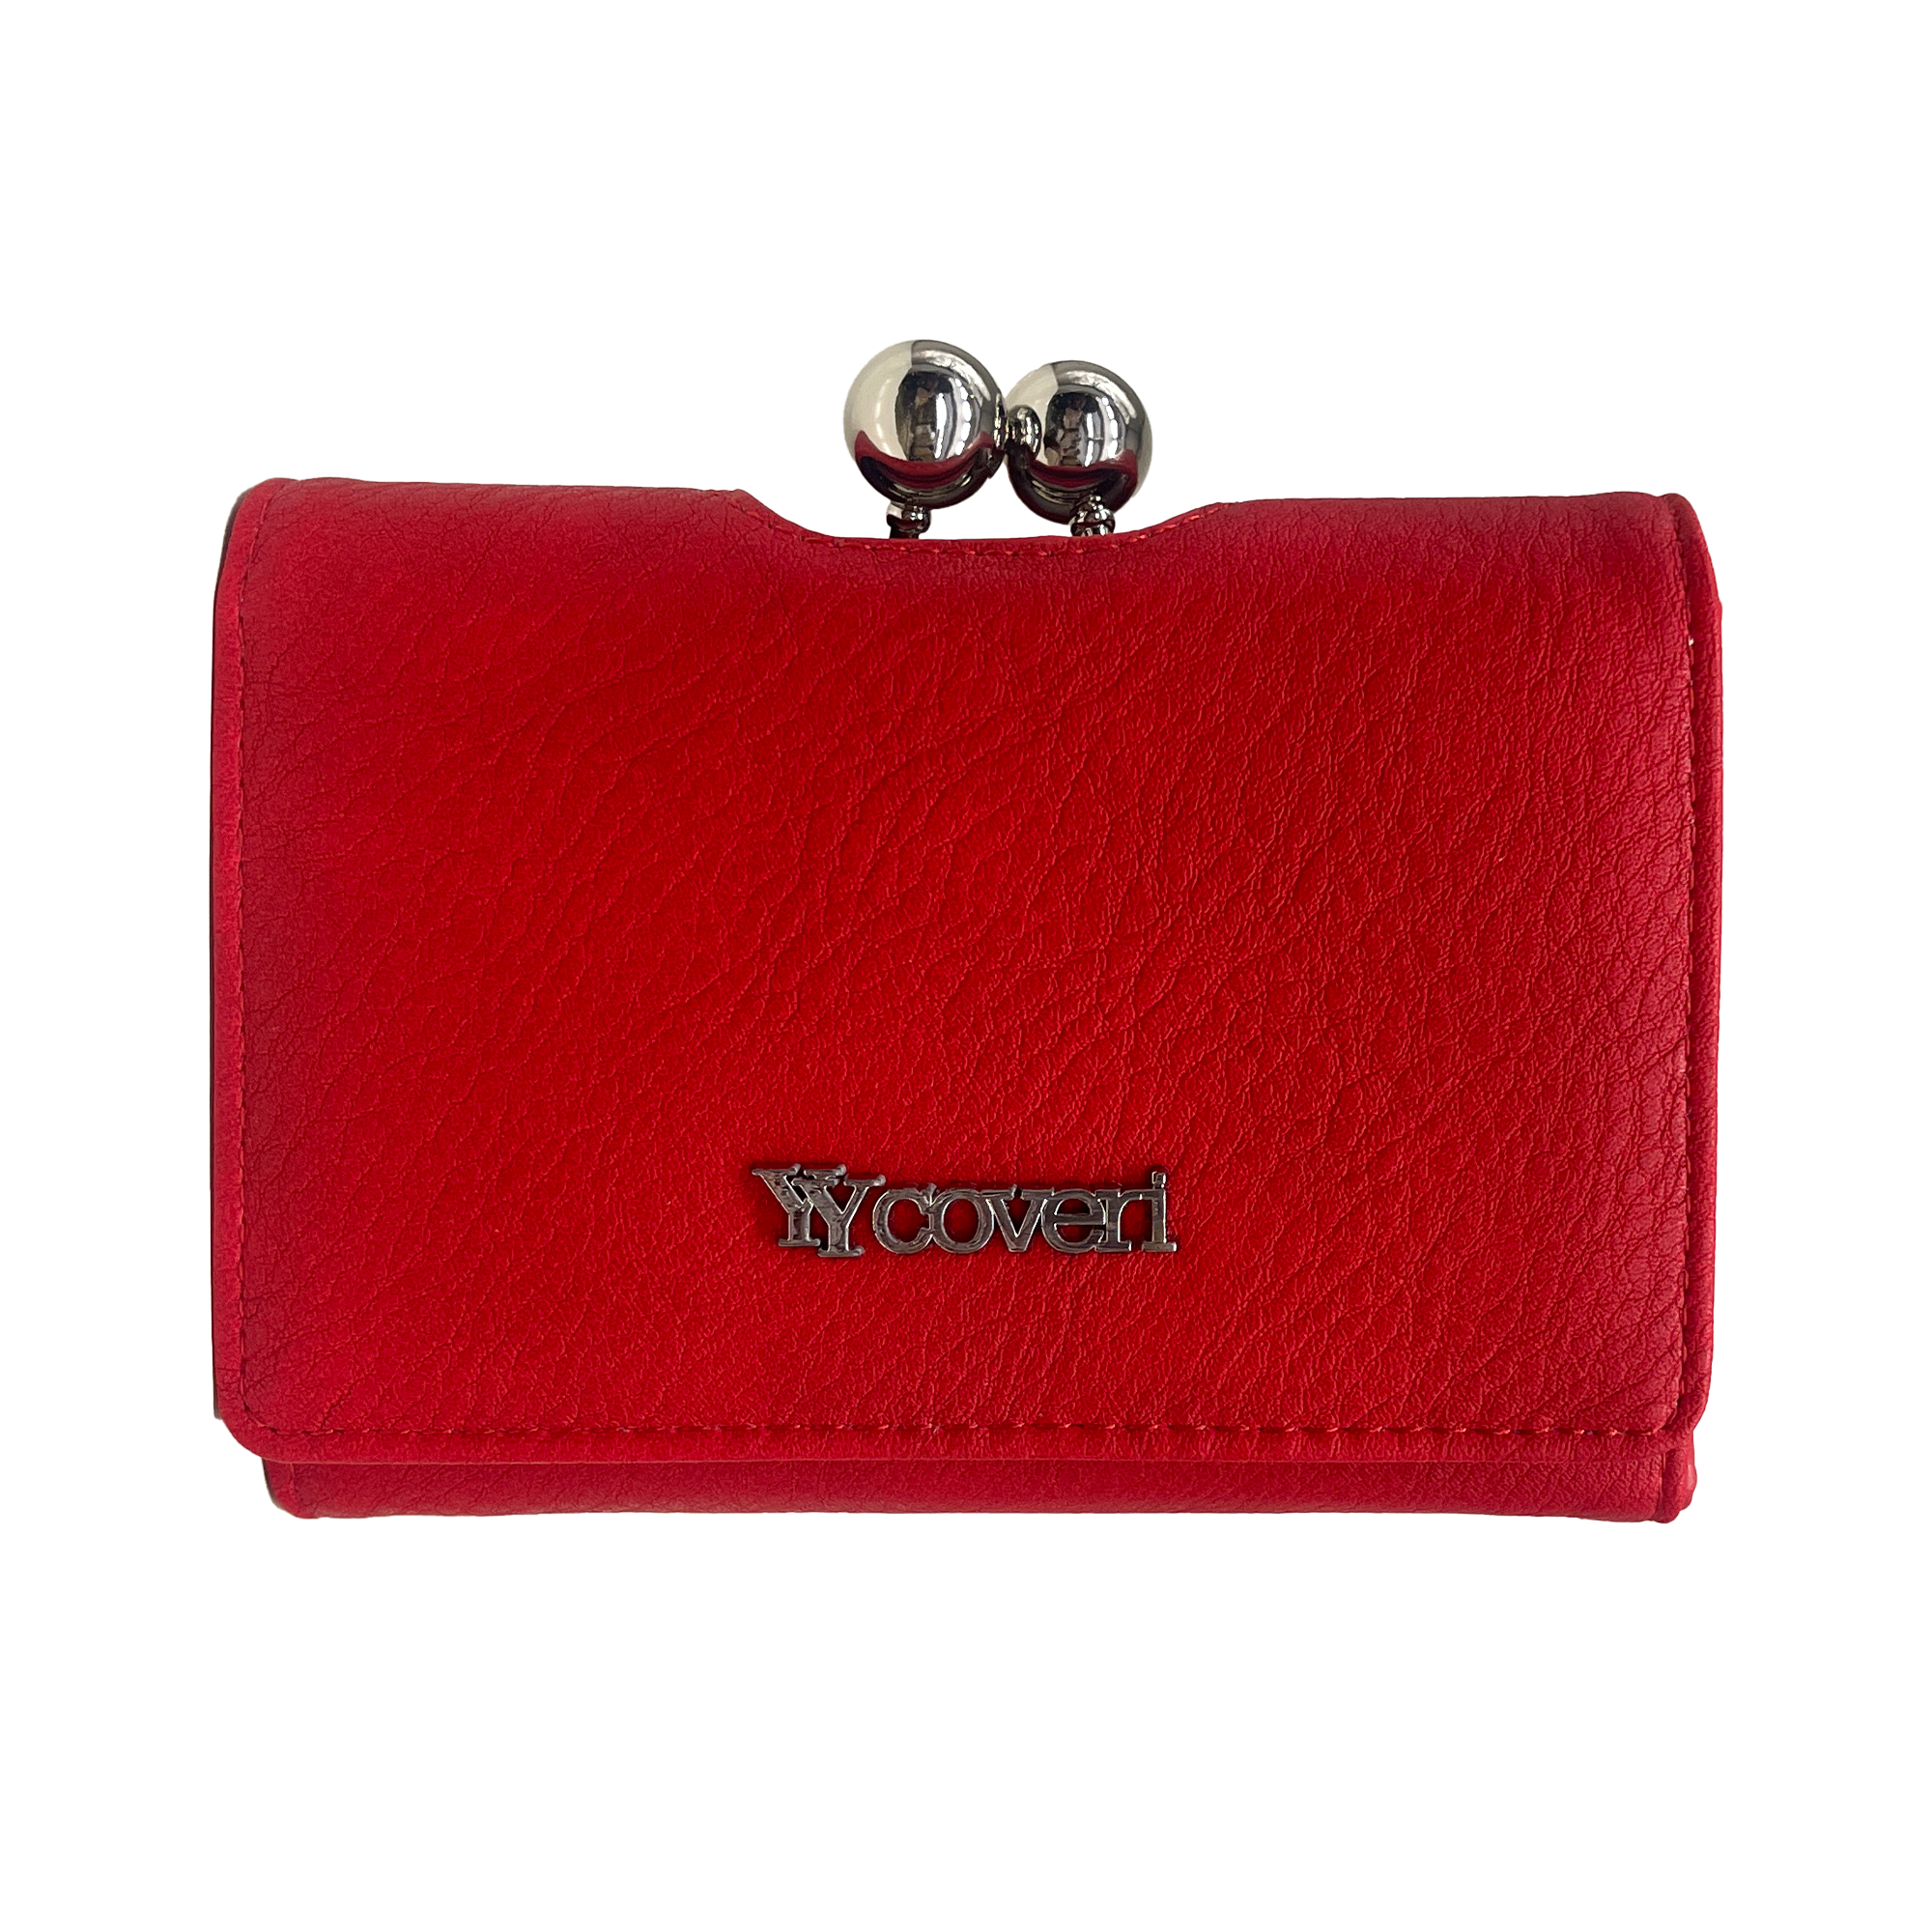 Yy Coveri Women's Wallet 13.2x12x4cm CYCJL803-1#